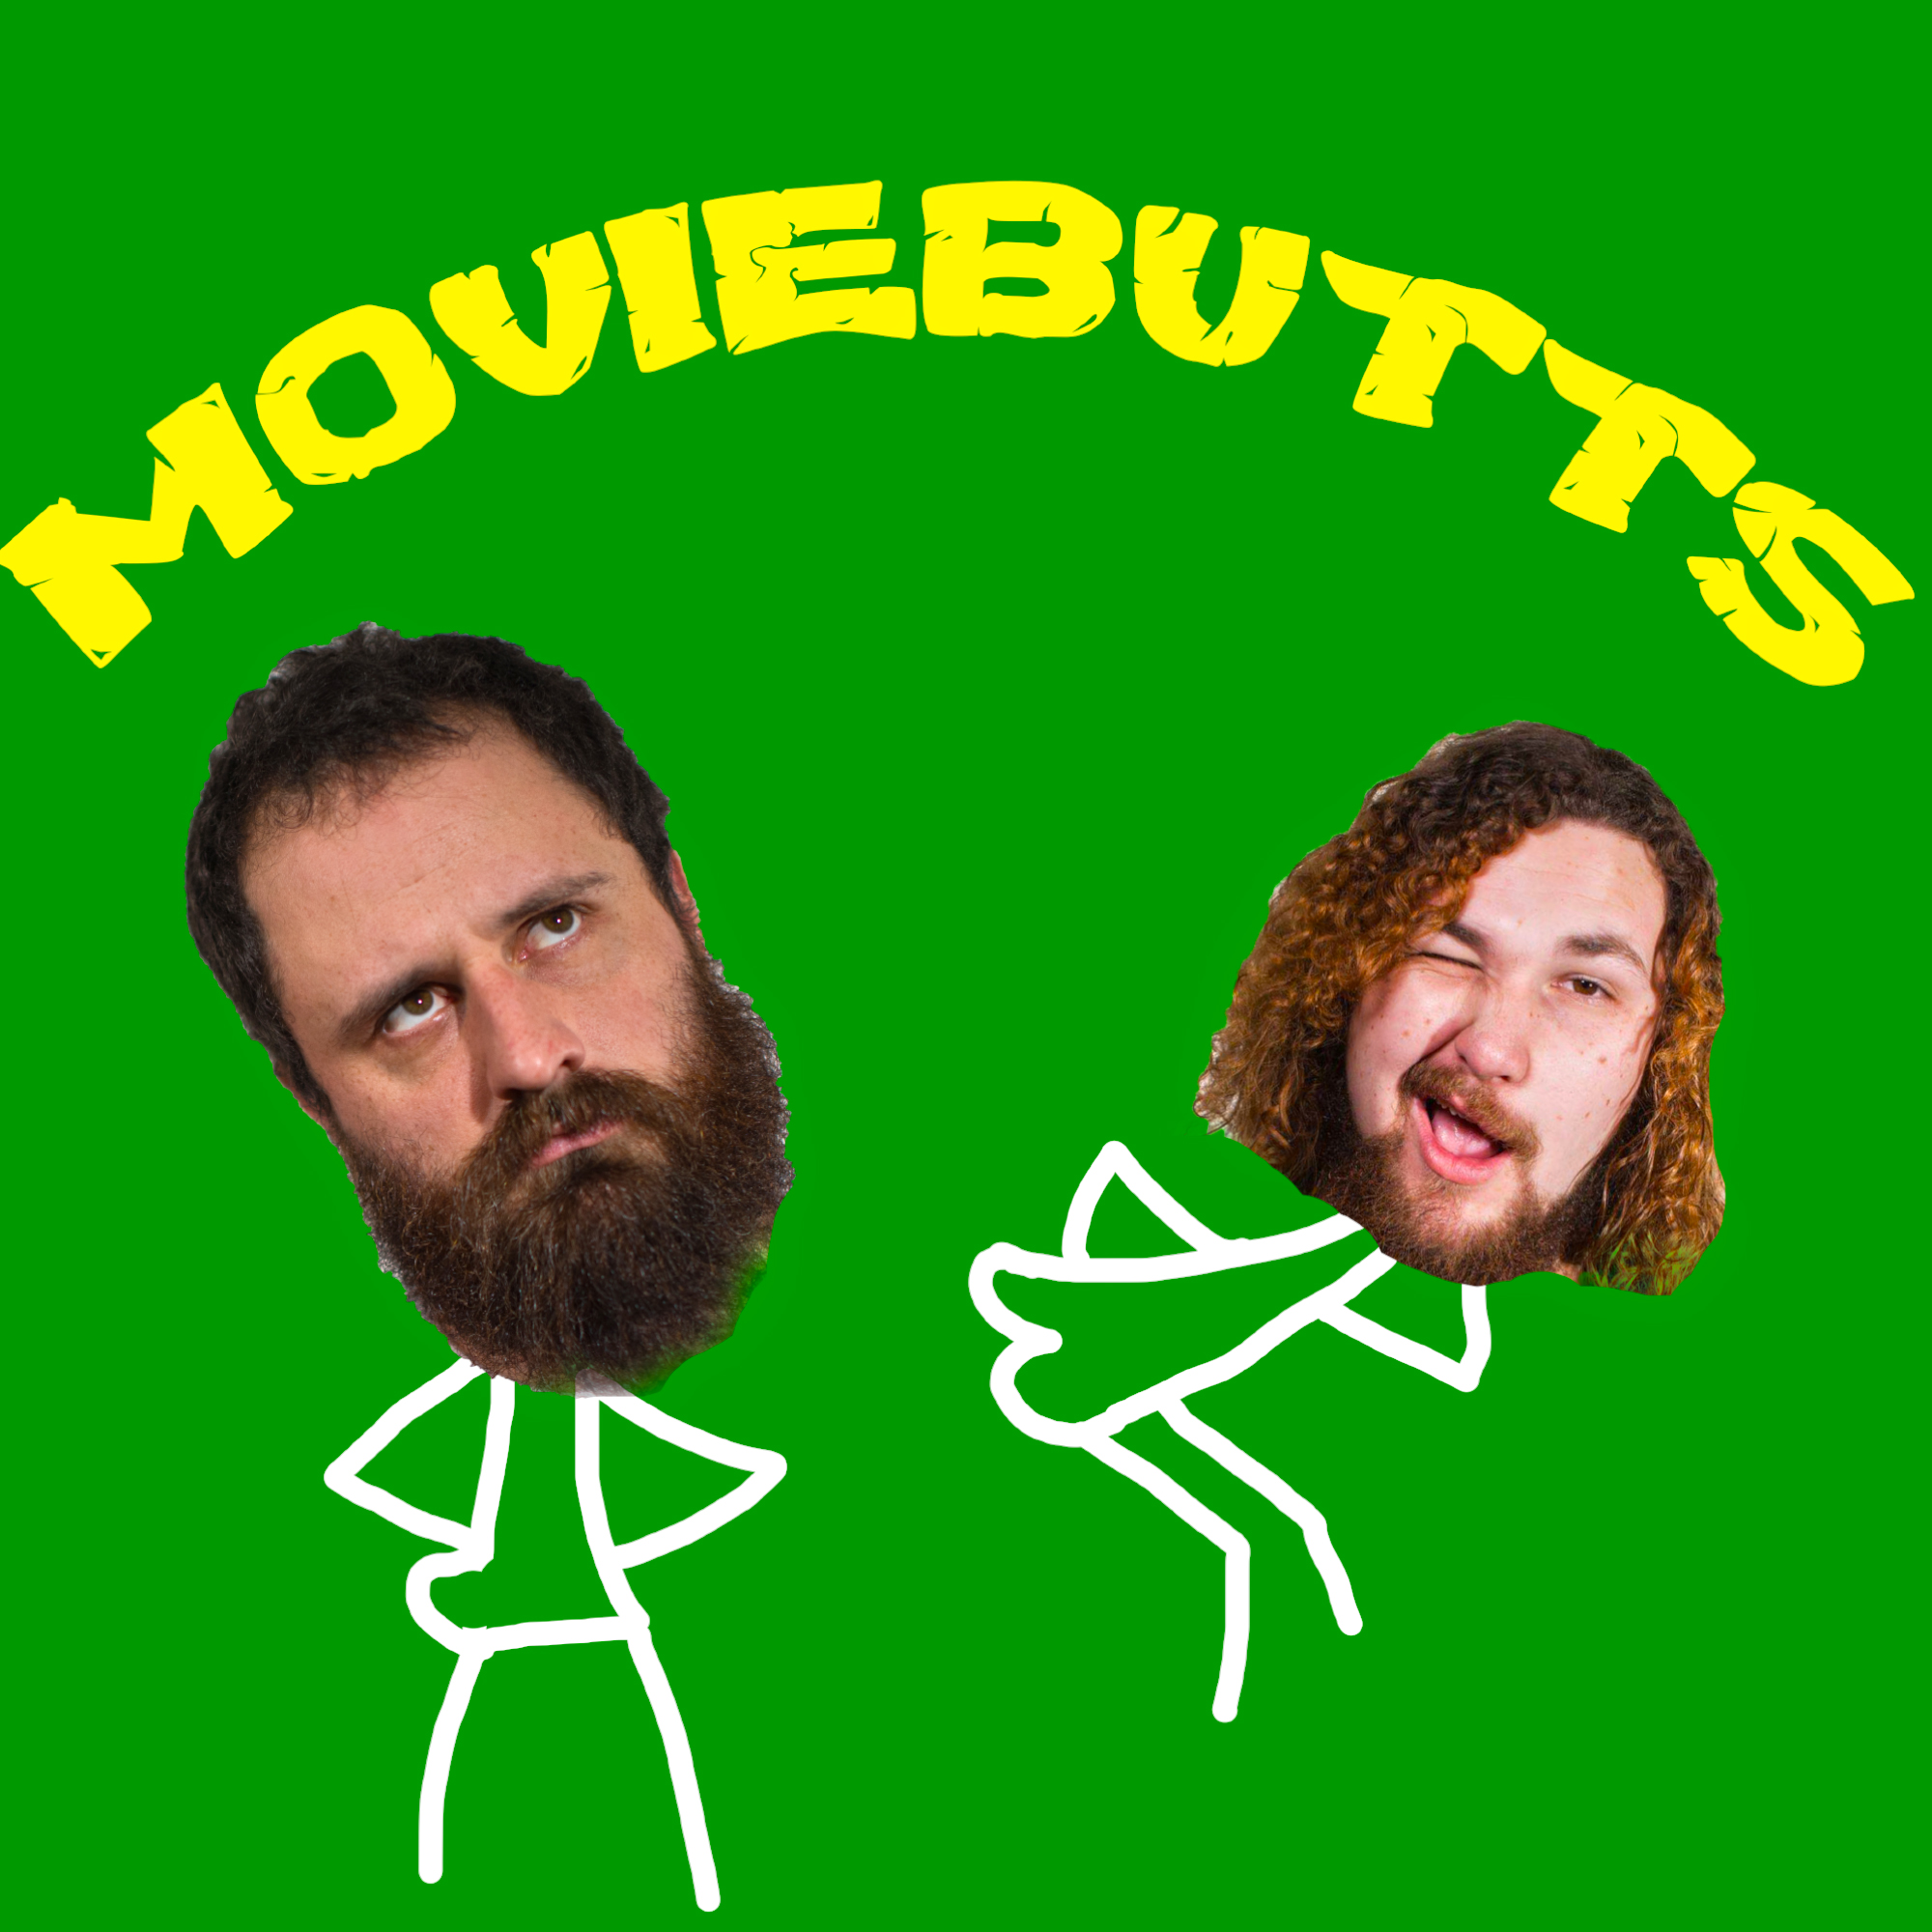 MovieButts